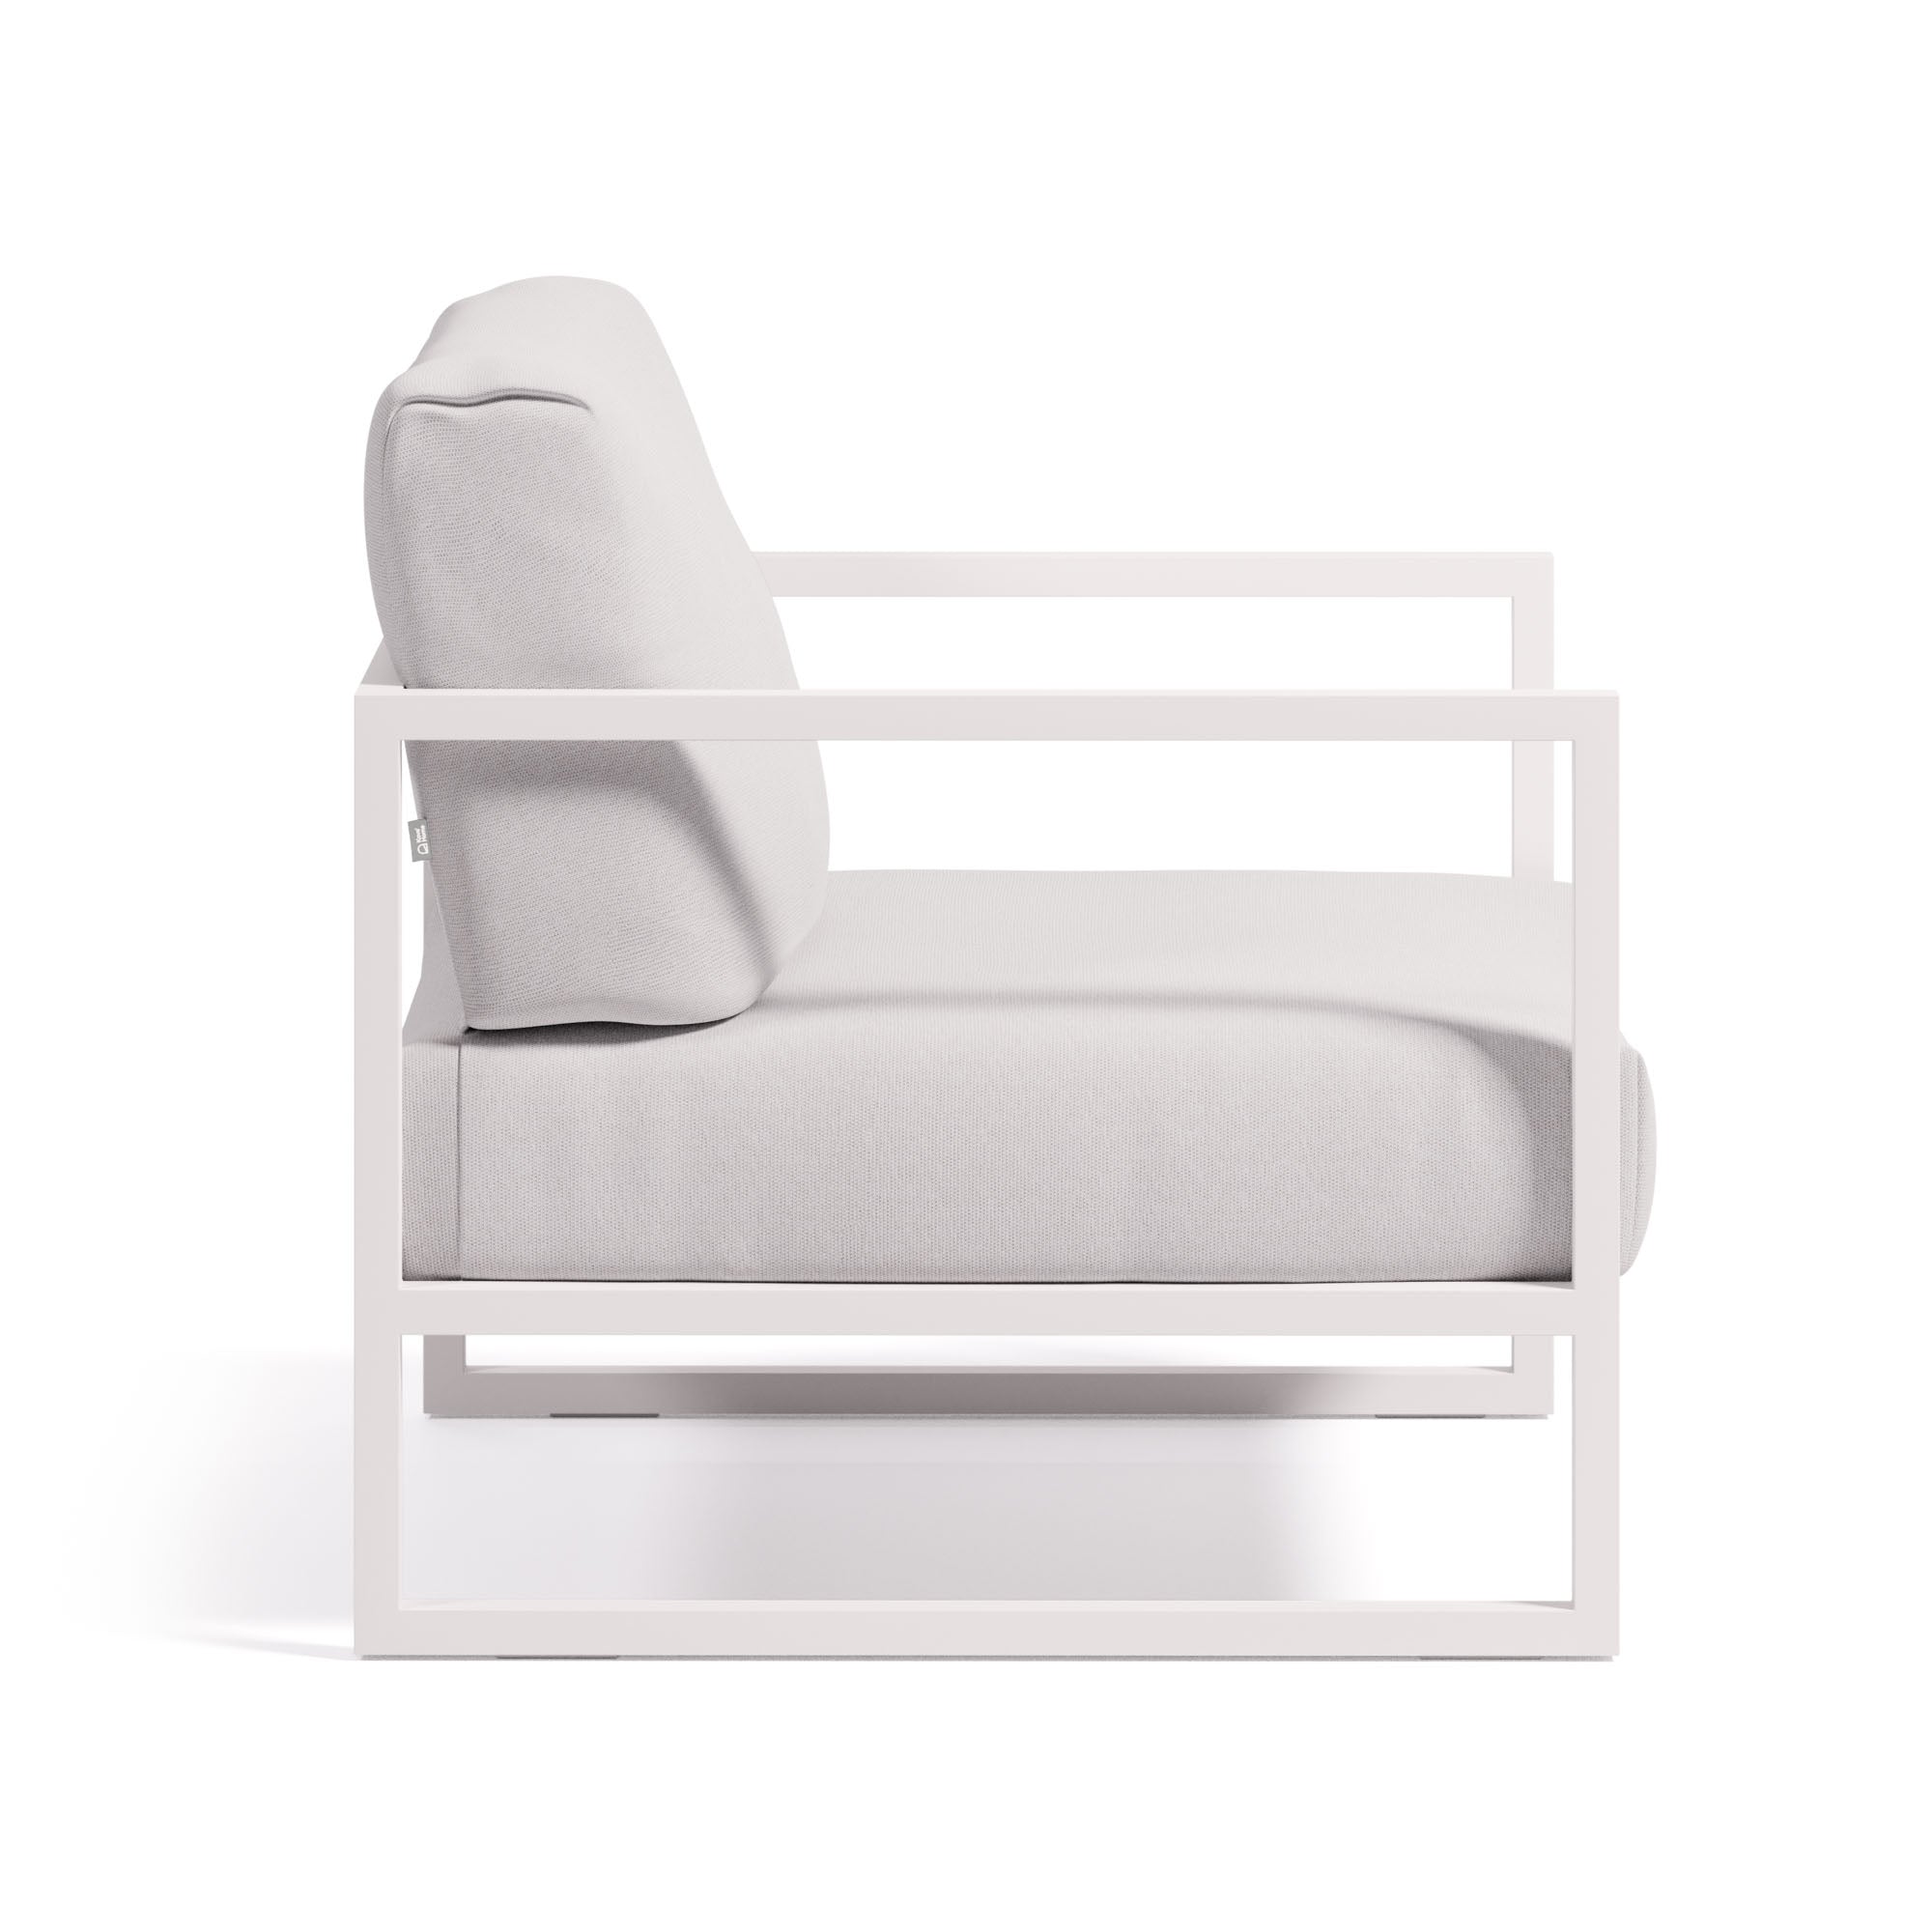 Comova 100% outdoor armchair in white and white aluminium